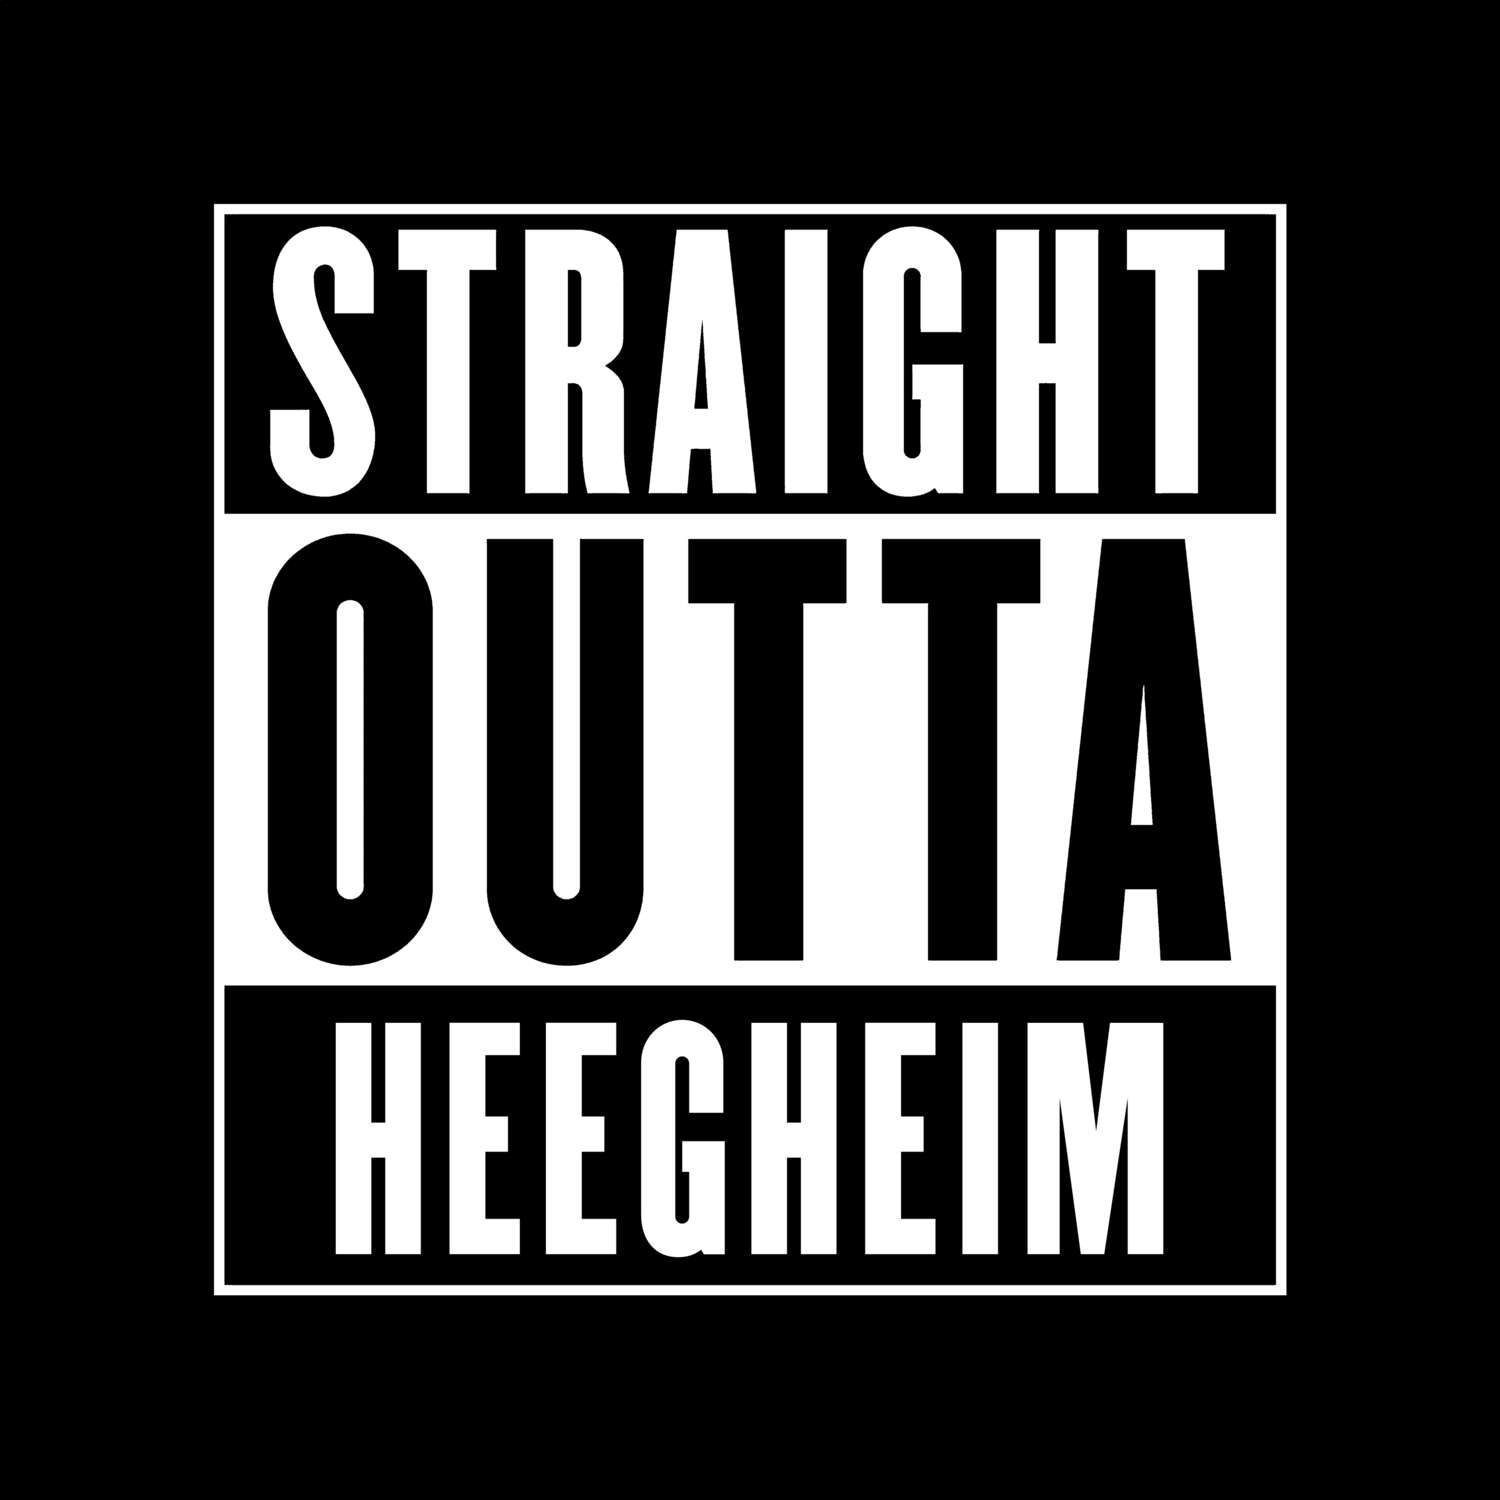 Heegheim T-Shirt »Straight Outta«